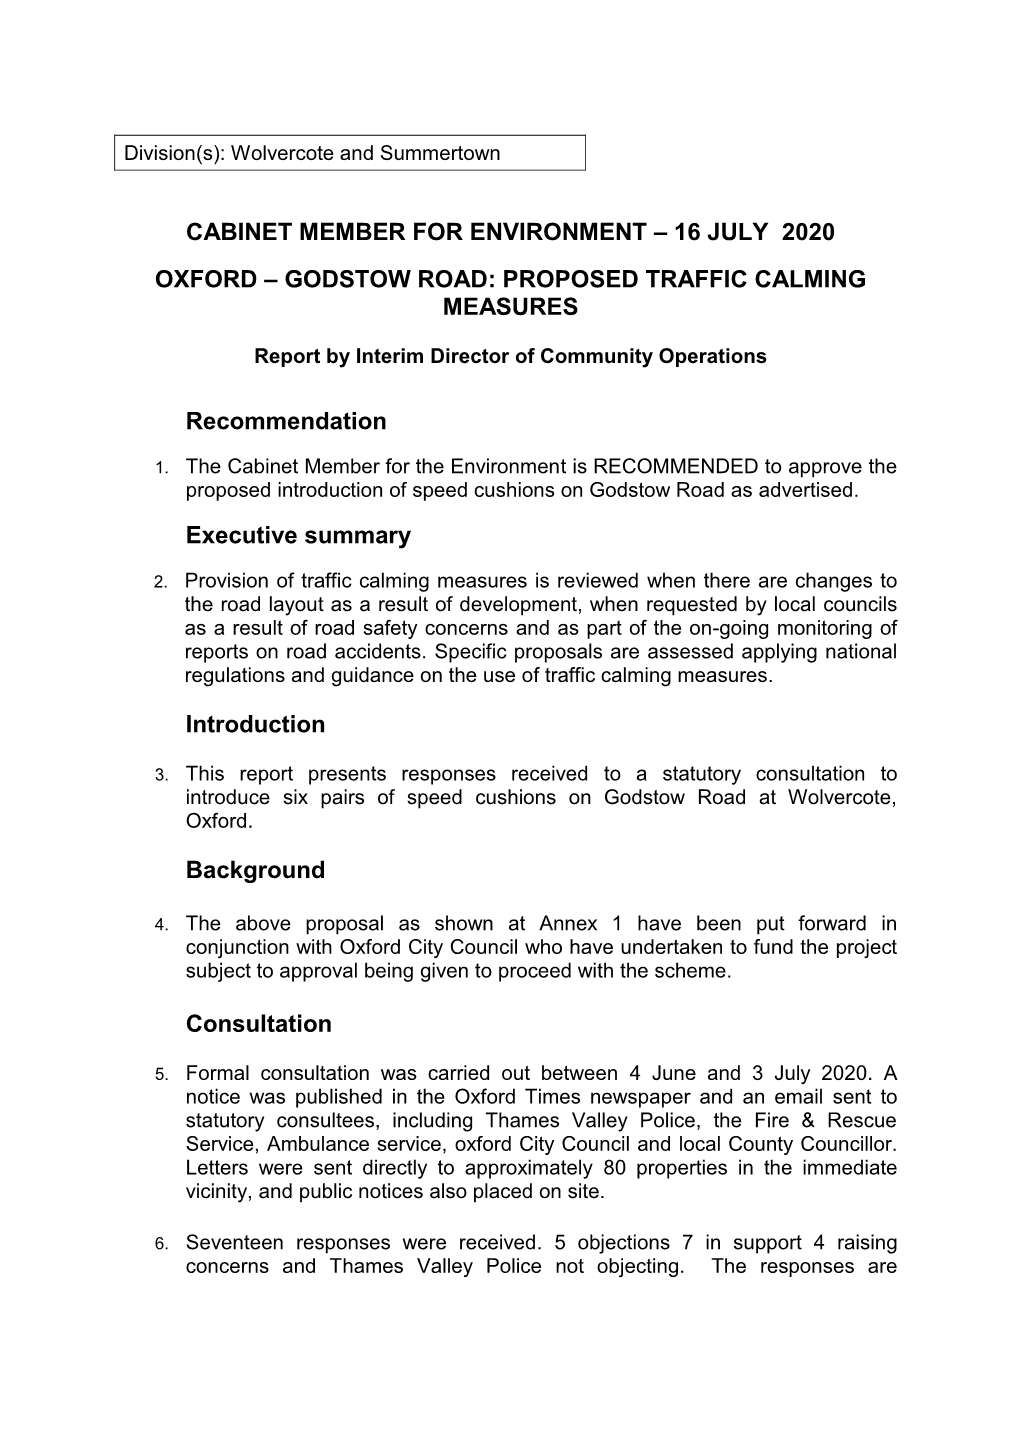 Godstow Road: Proposed Traffic Calming Measures